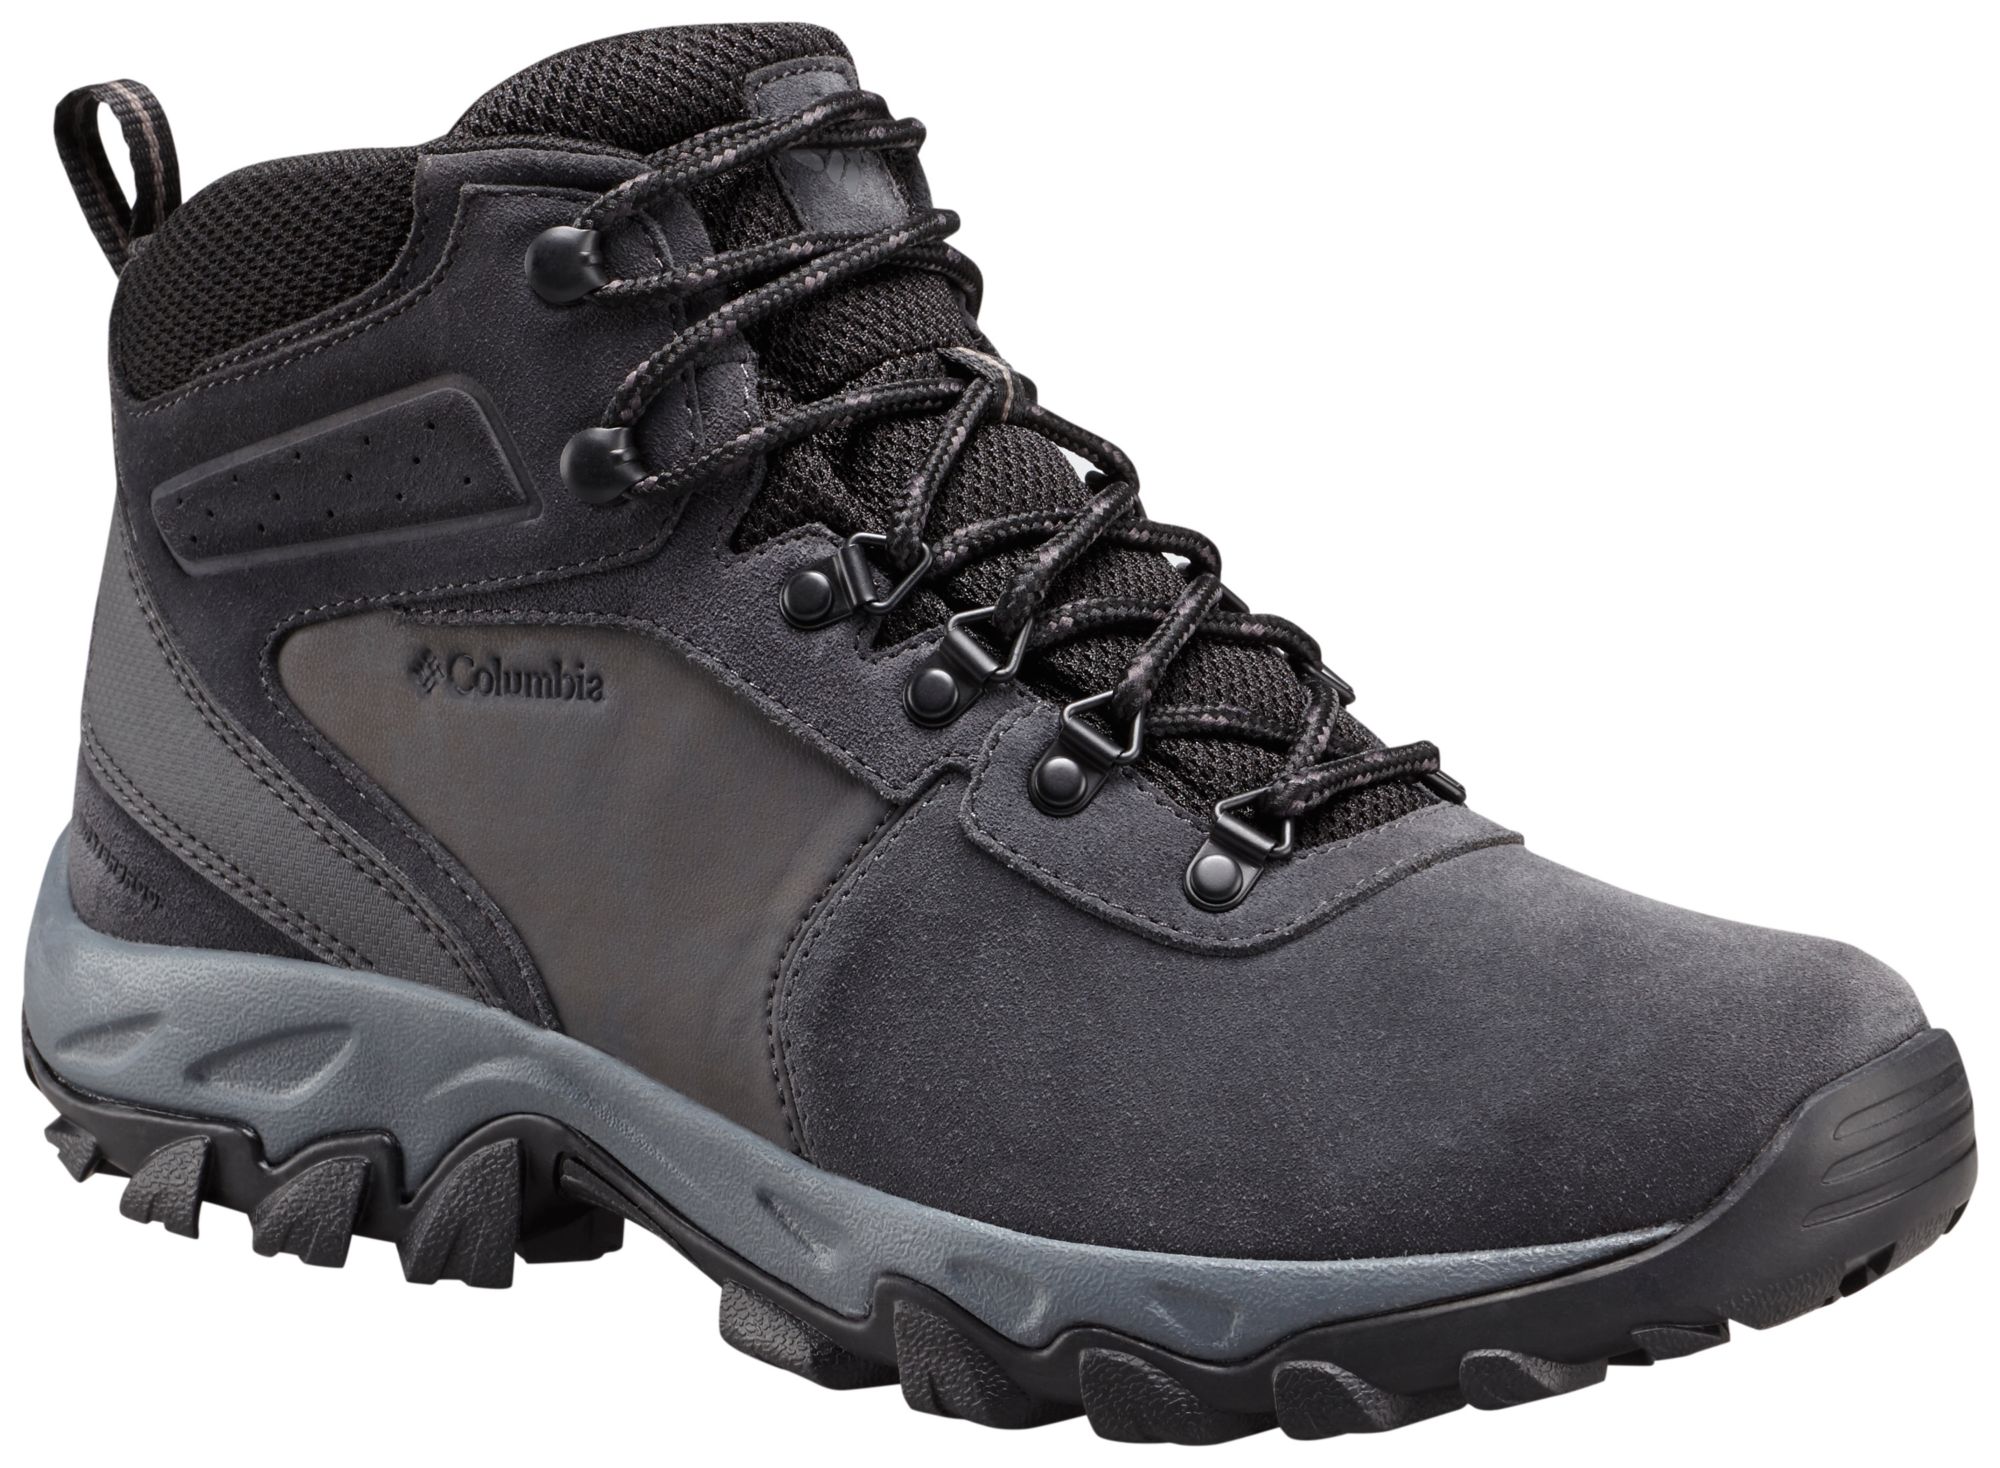 Photos - Trekking Shoes Columbia Men's Newton Ridge Plus II Suede Waterproof Hiking Boots, Size 9. 